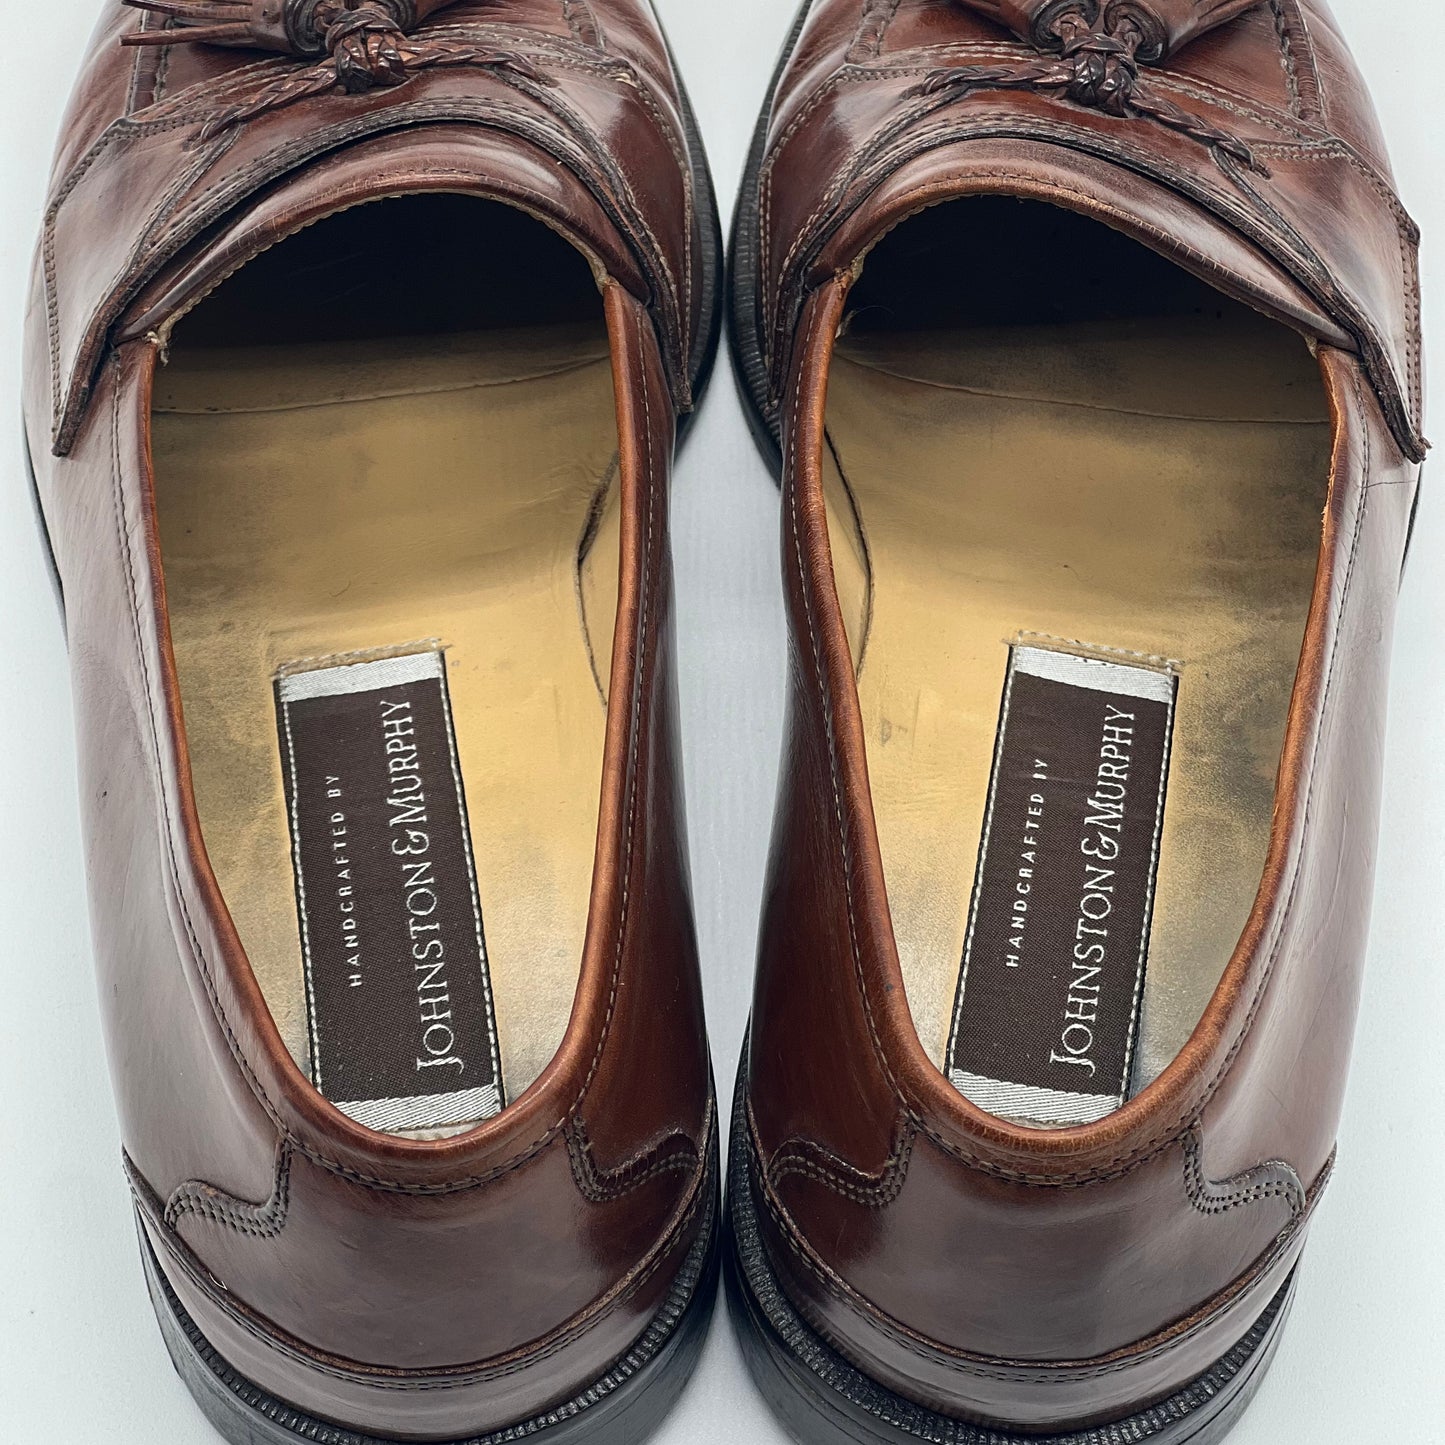 Johnston Murphy Brown Leather Fringe Tassle Loafers Men's 9.5 M Slip on Dress Shoes